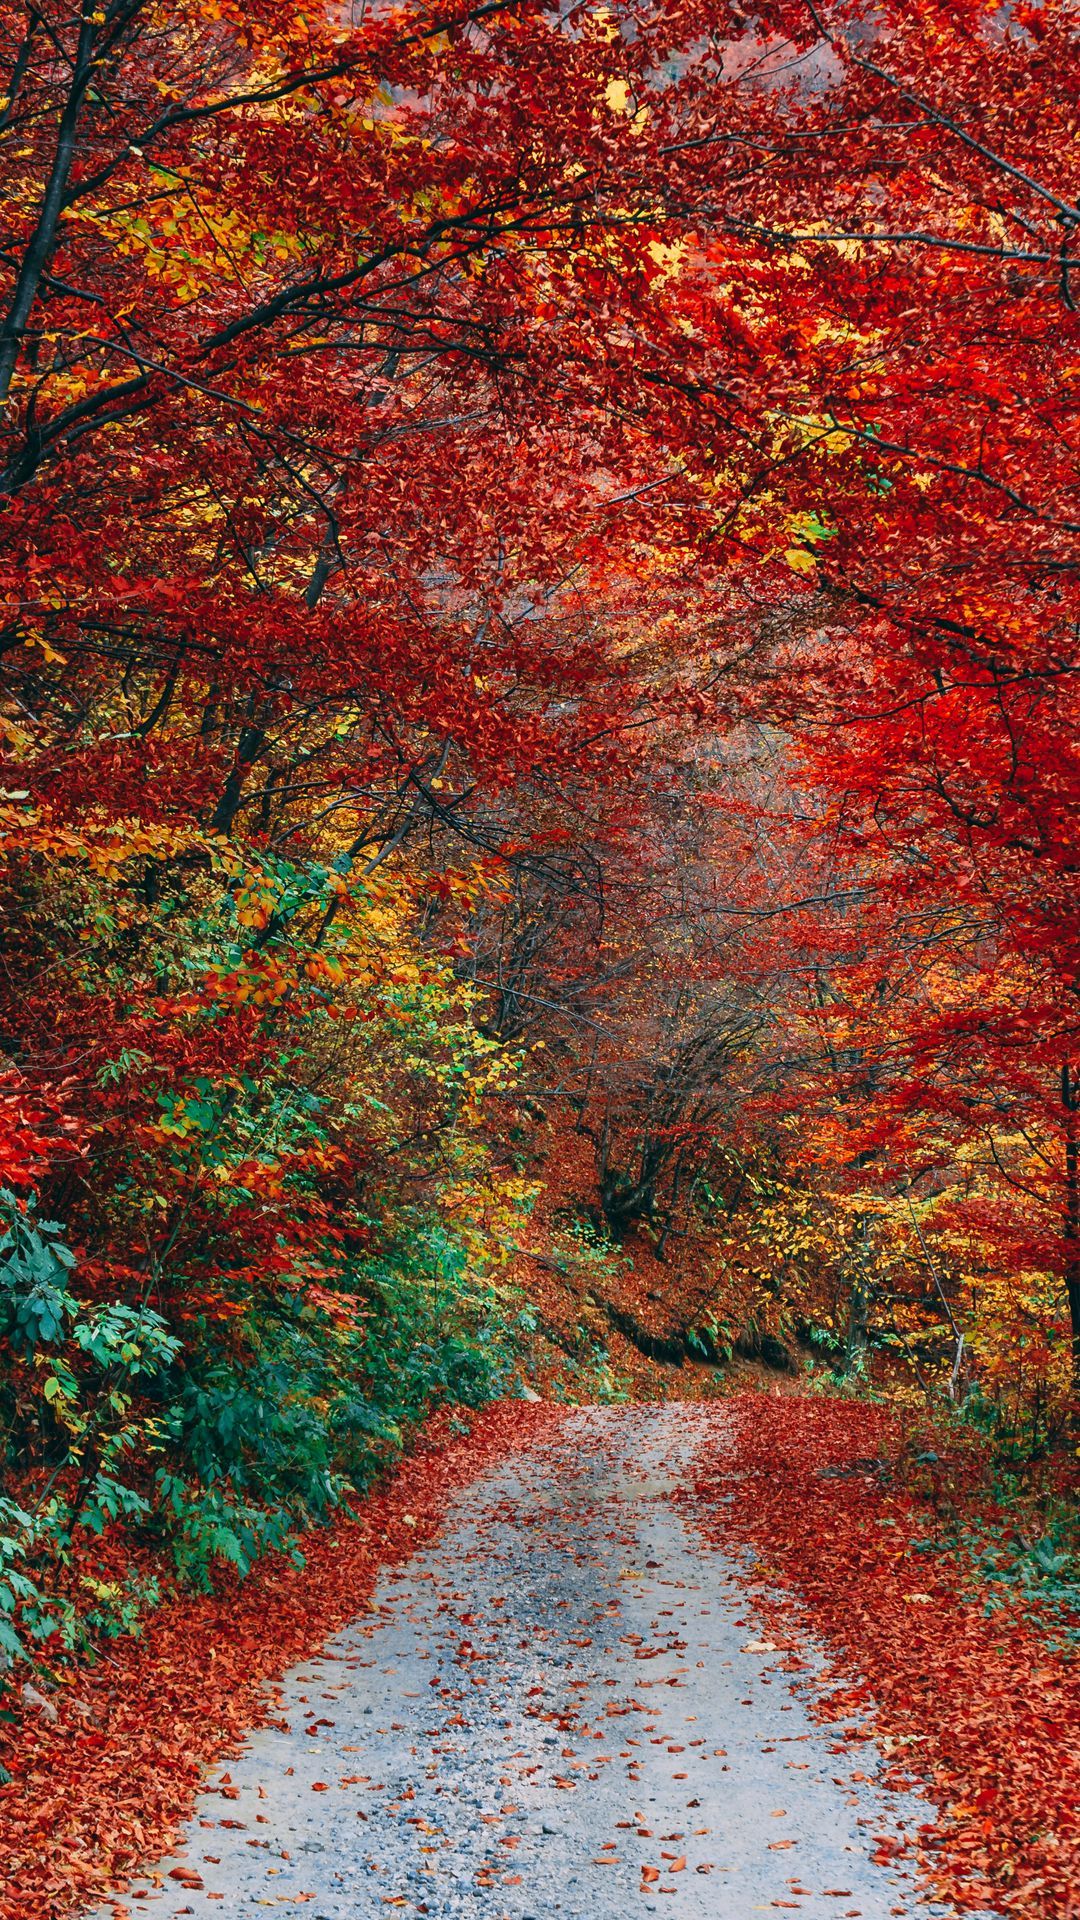 Download wallpaper 1080x1920 autumn, trail, foliage, fallen samsung galaxy s s note, sony xperia z, z z z htc one, lenovo vibe HD background